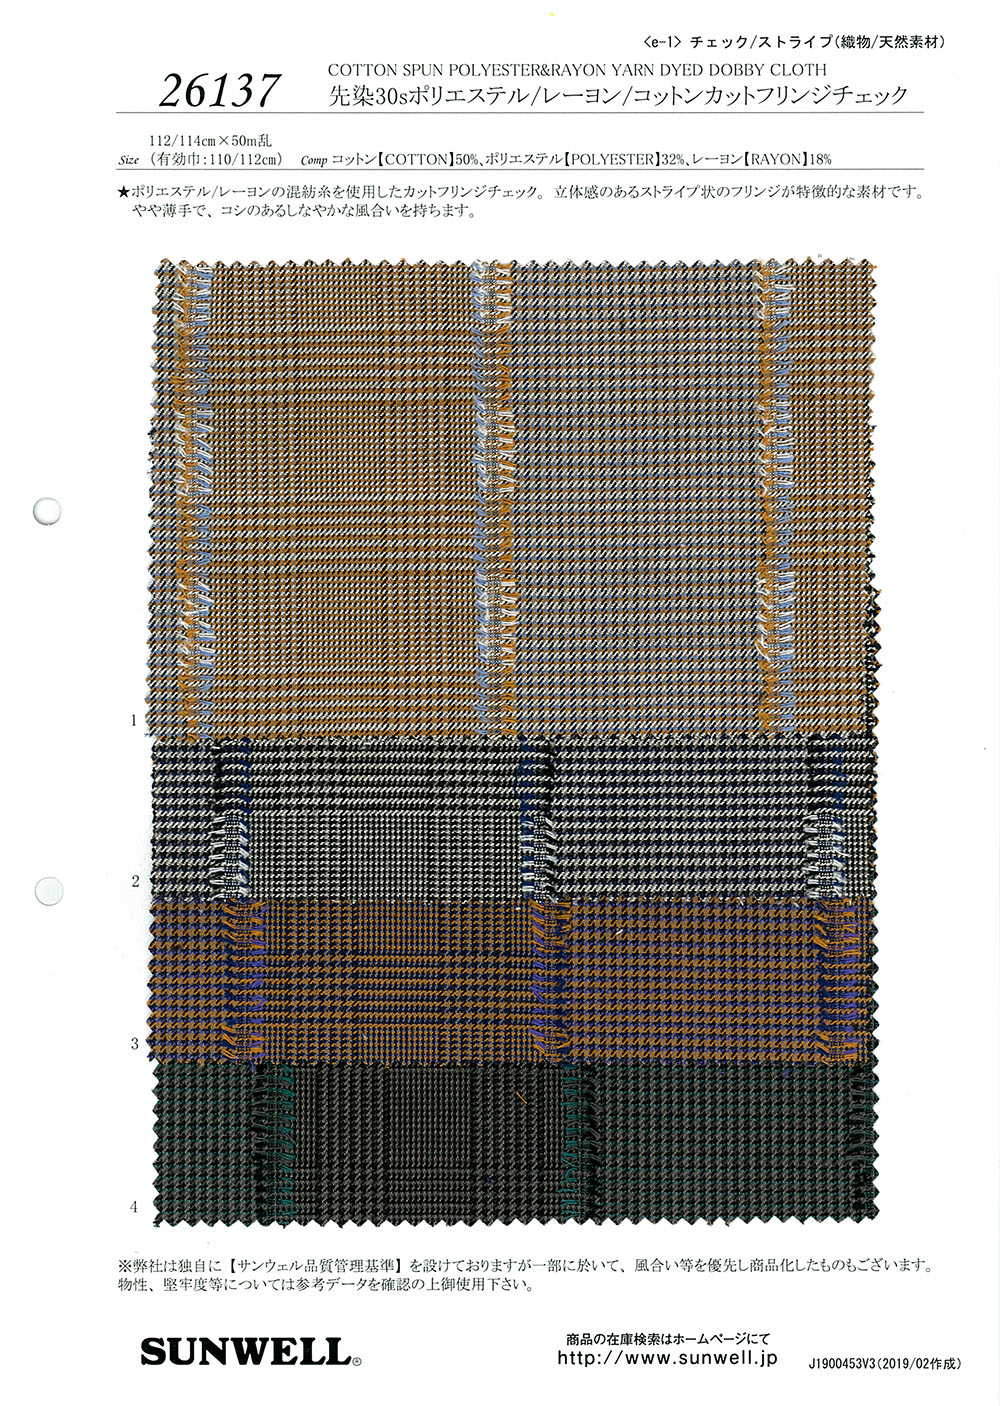 26137 Cheque Con Flecos Cortados En Poliéster/rayón/algodón De 30 Hilos Teñidos En Hilo[Fabrica Textil] SUNWELL